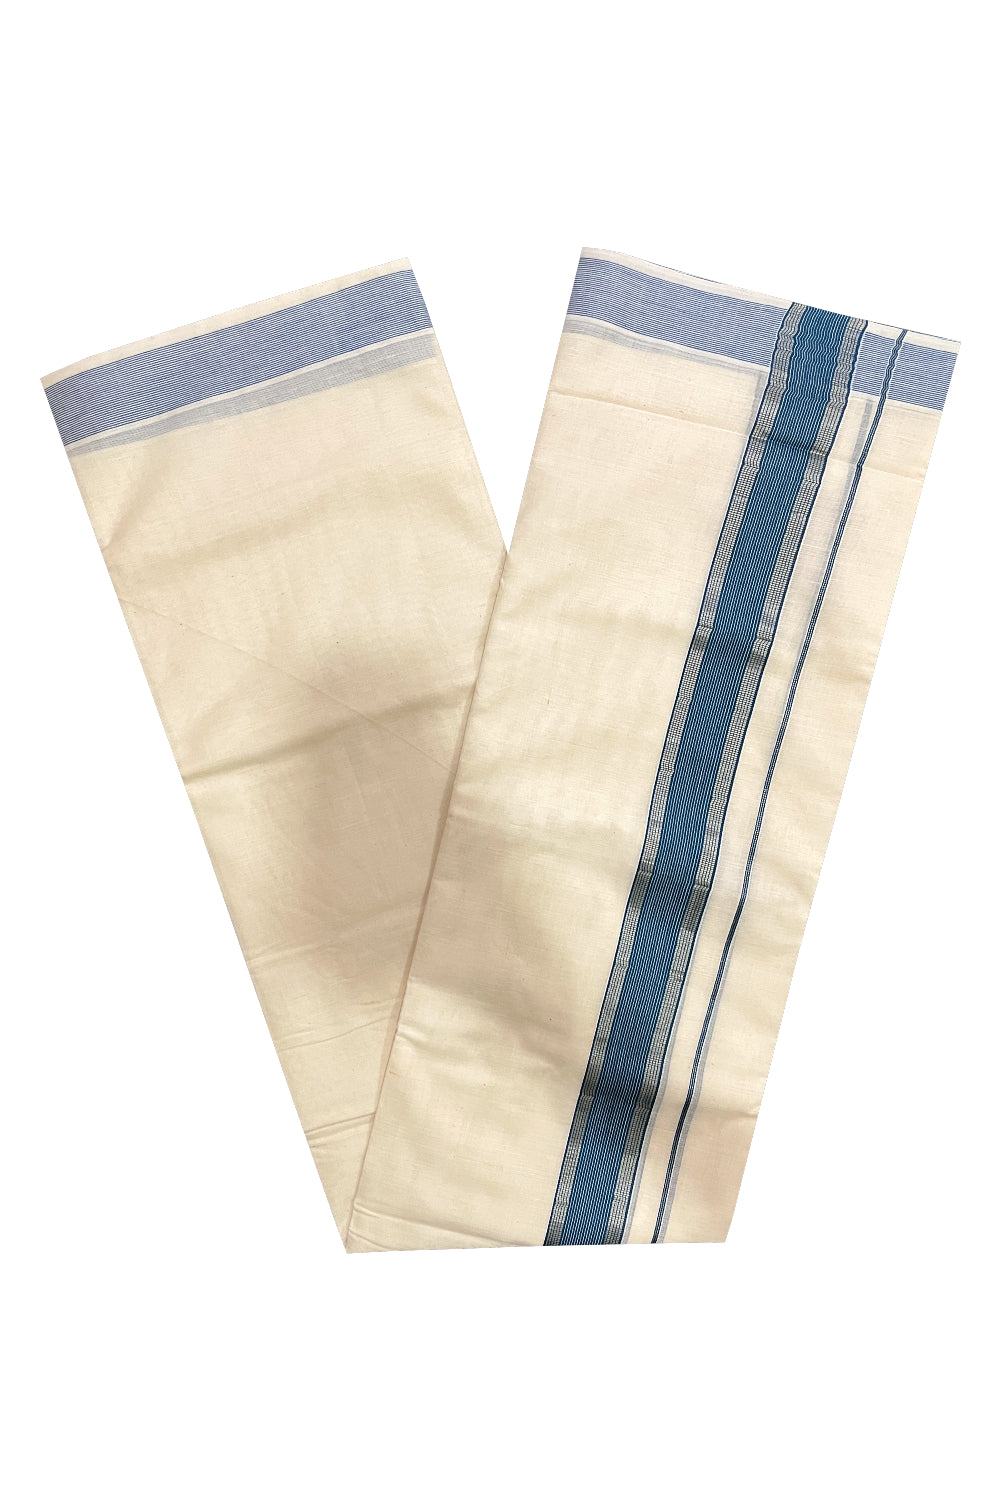 Pure Cotton Kerala Double Mundu with Silver Kasavu and Blue Kara (South Indian Kerala Dhoti)